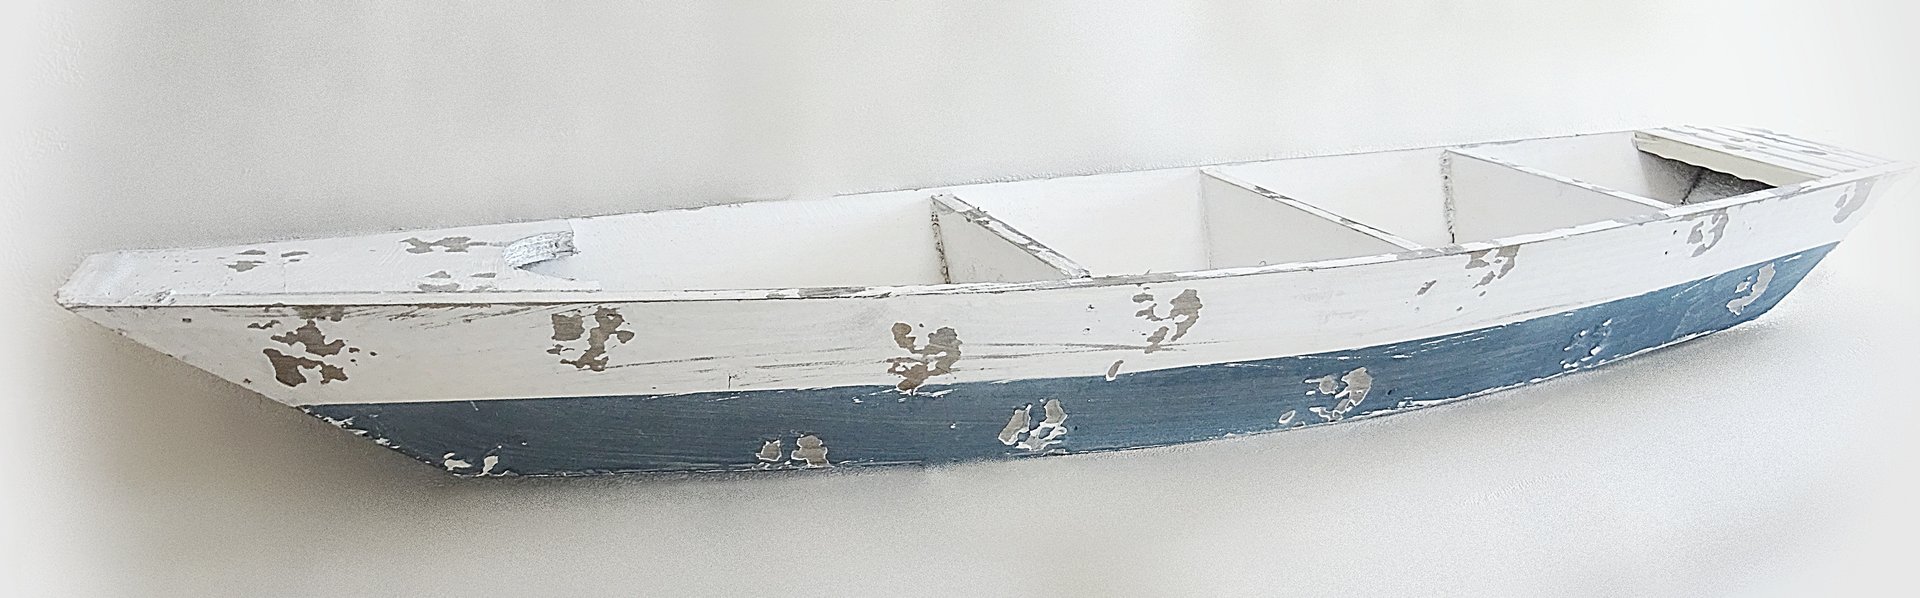 DekoEins® Holz Deko Boot Schiff 65cm maritim weiß Dekoration Meer Strand Muschel 